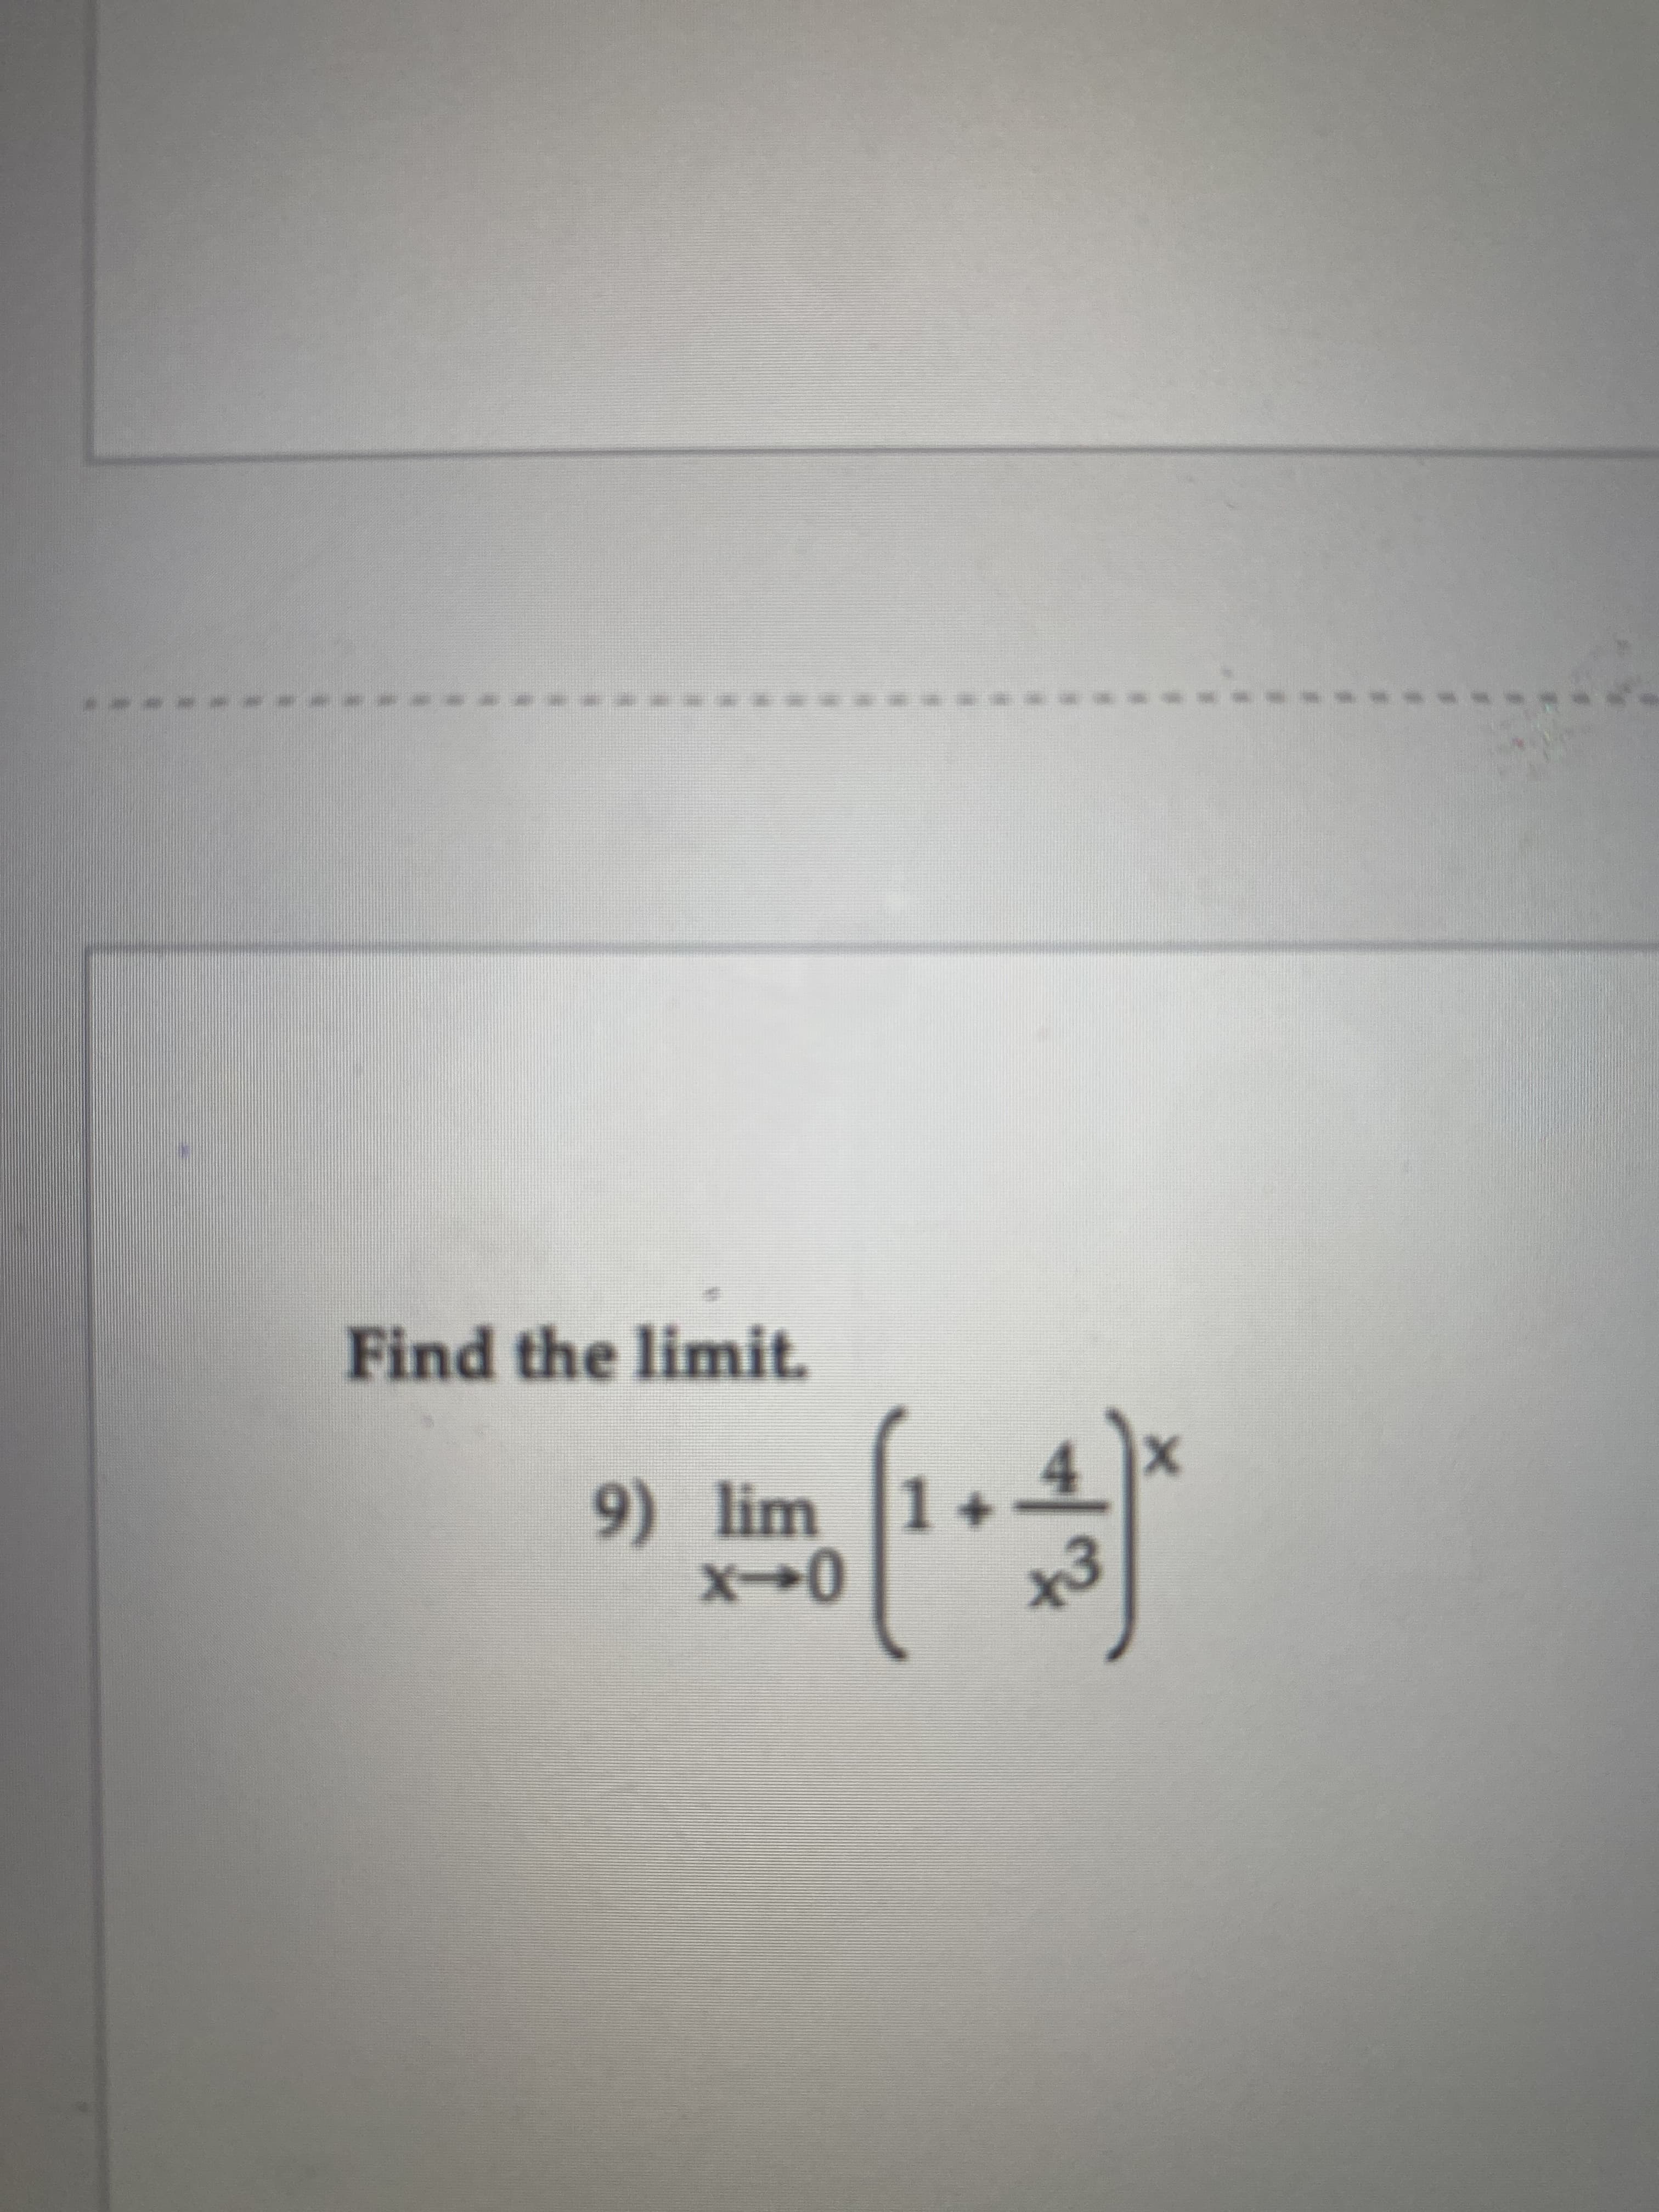 0+X
+1+
9) lim
Find the limit.
* ..
